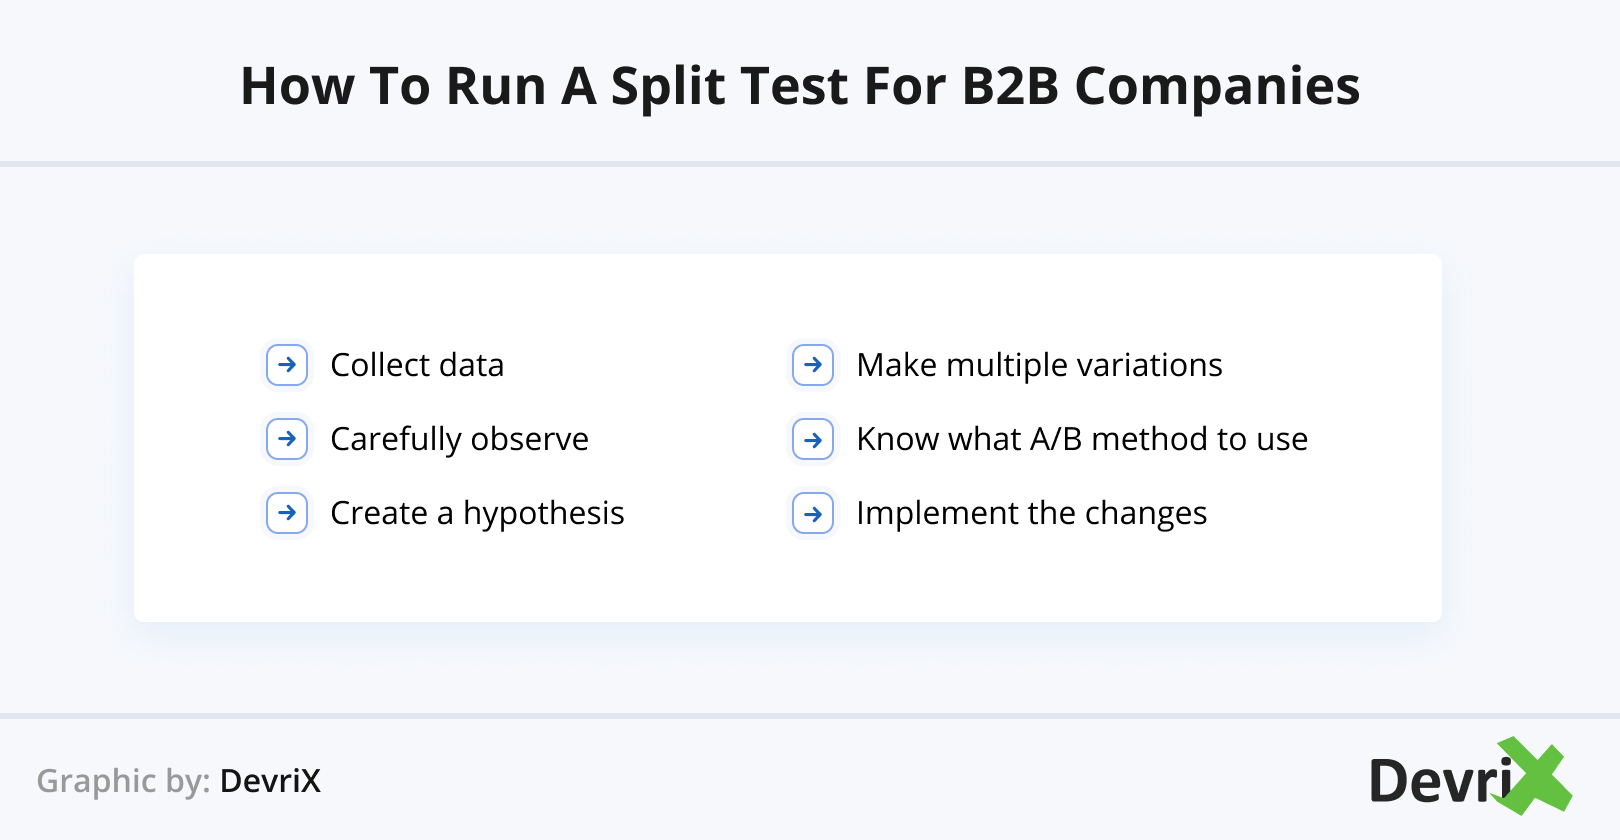 How to Run a Split Test for B2B Companies